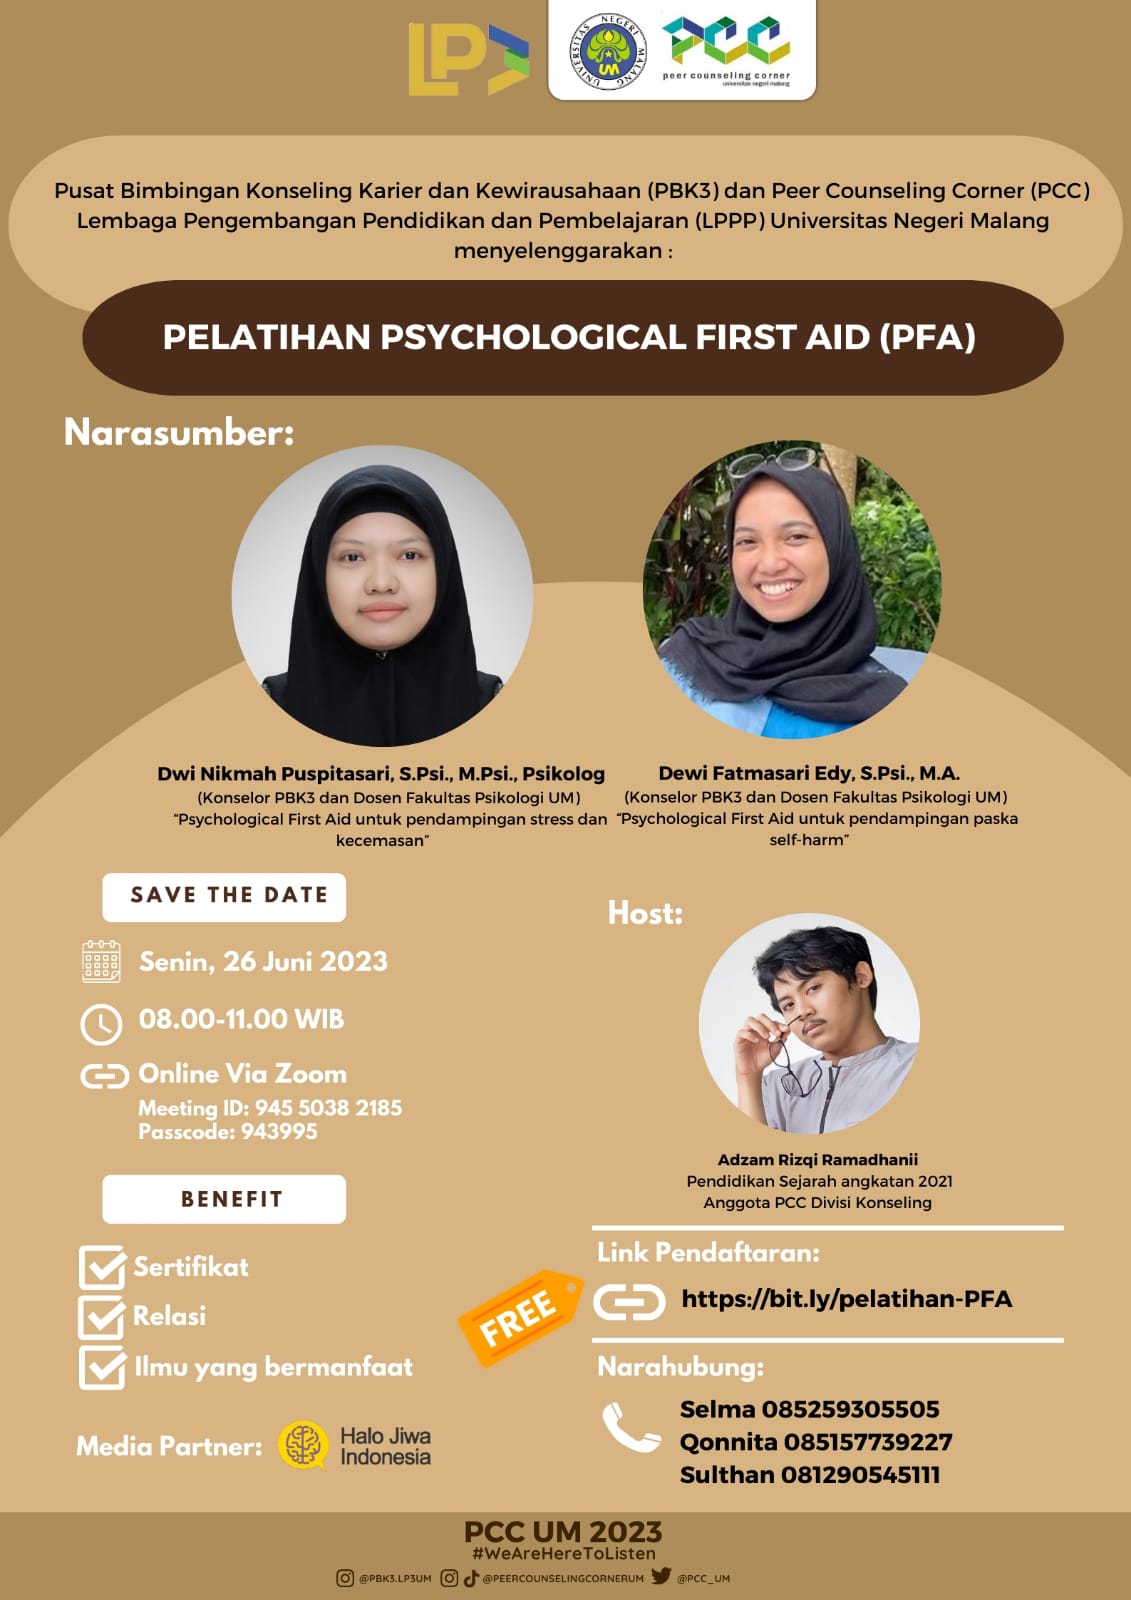 Pelatihan Psychological First Aid (PFA)